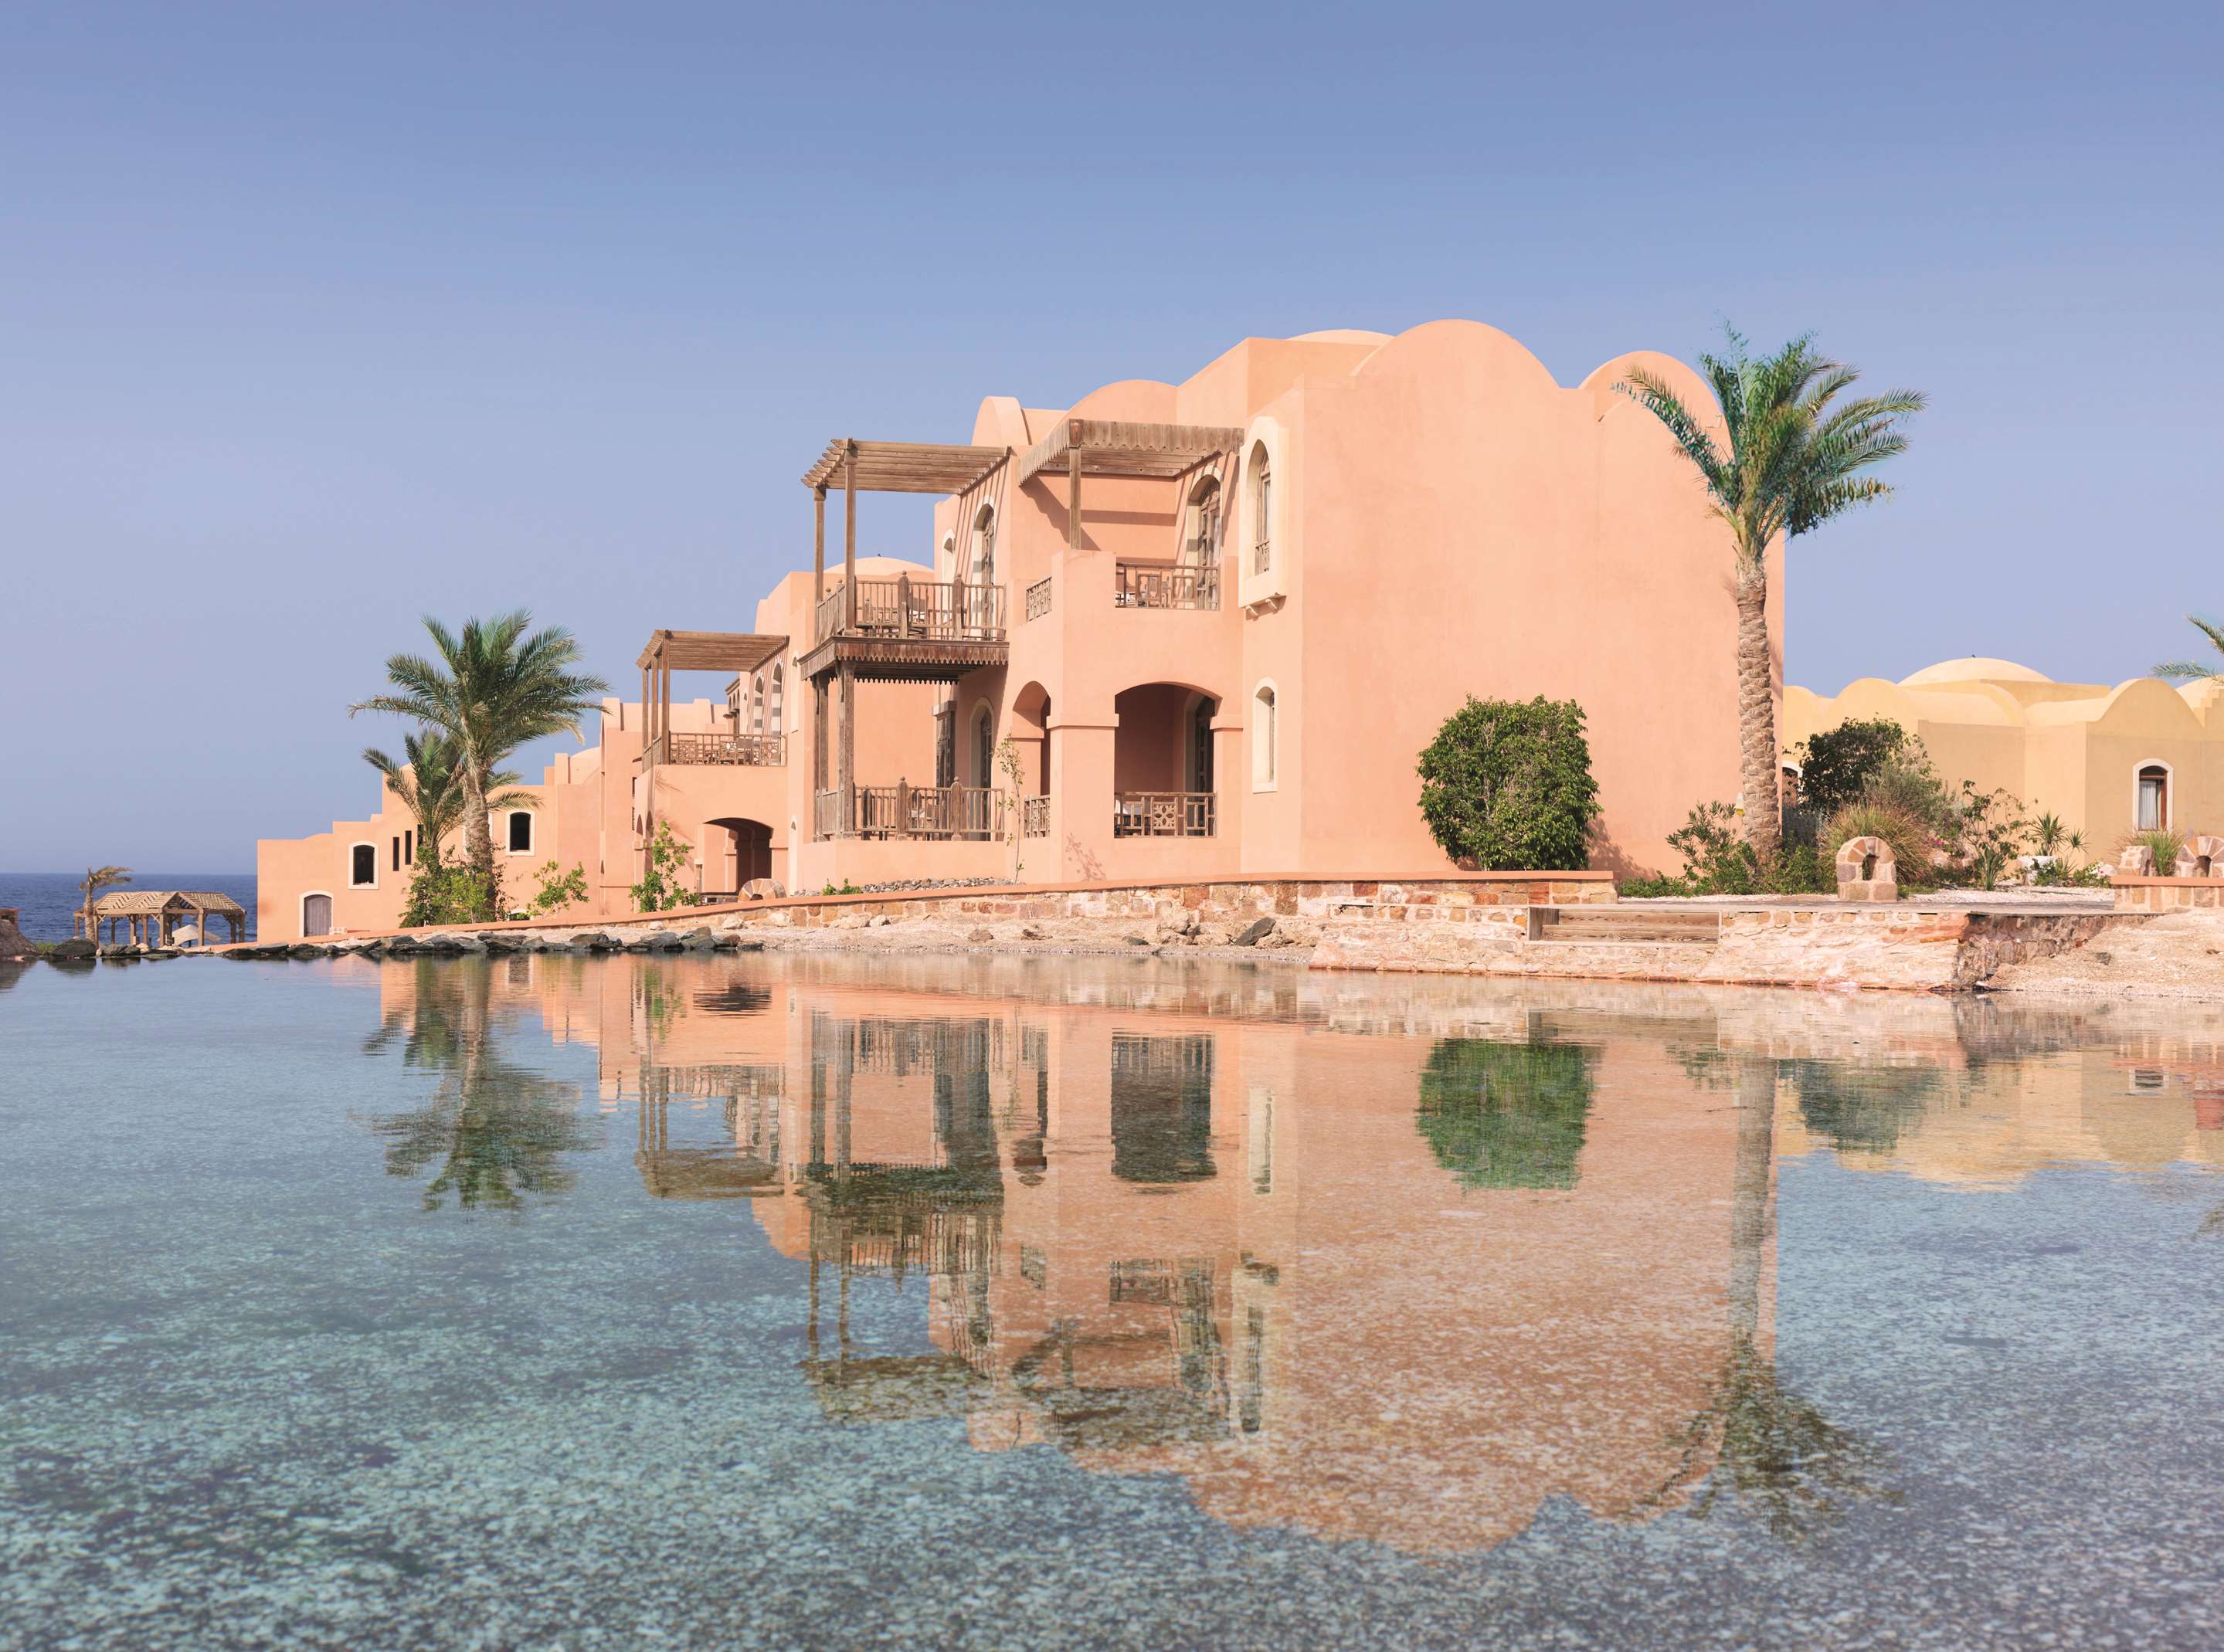 Radison Blu Resort, El Quseir, Egypt